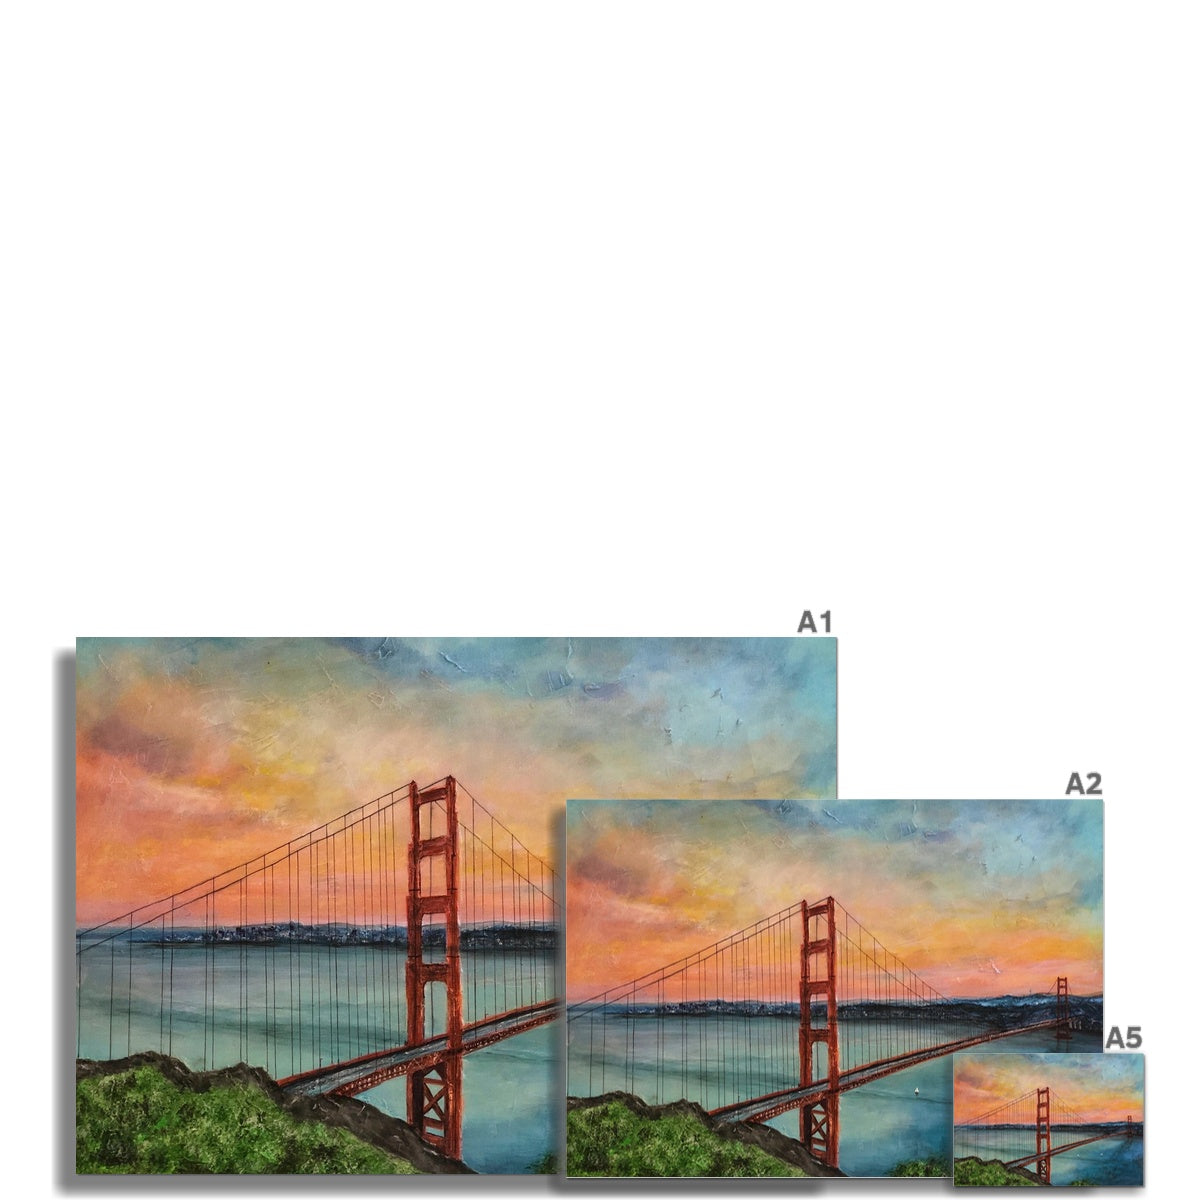 The Golden Gate Bridge Painting | Fine Art Prints From Scotland-Unframed Prints-World Art Gallery-Paintings, Prints, Homeware, Art Gifts From Scotland By Scottish Artist Kevin Hunter